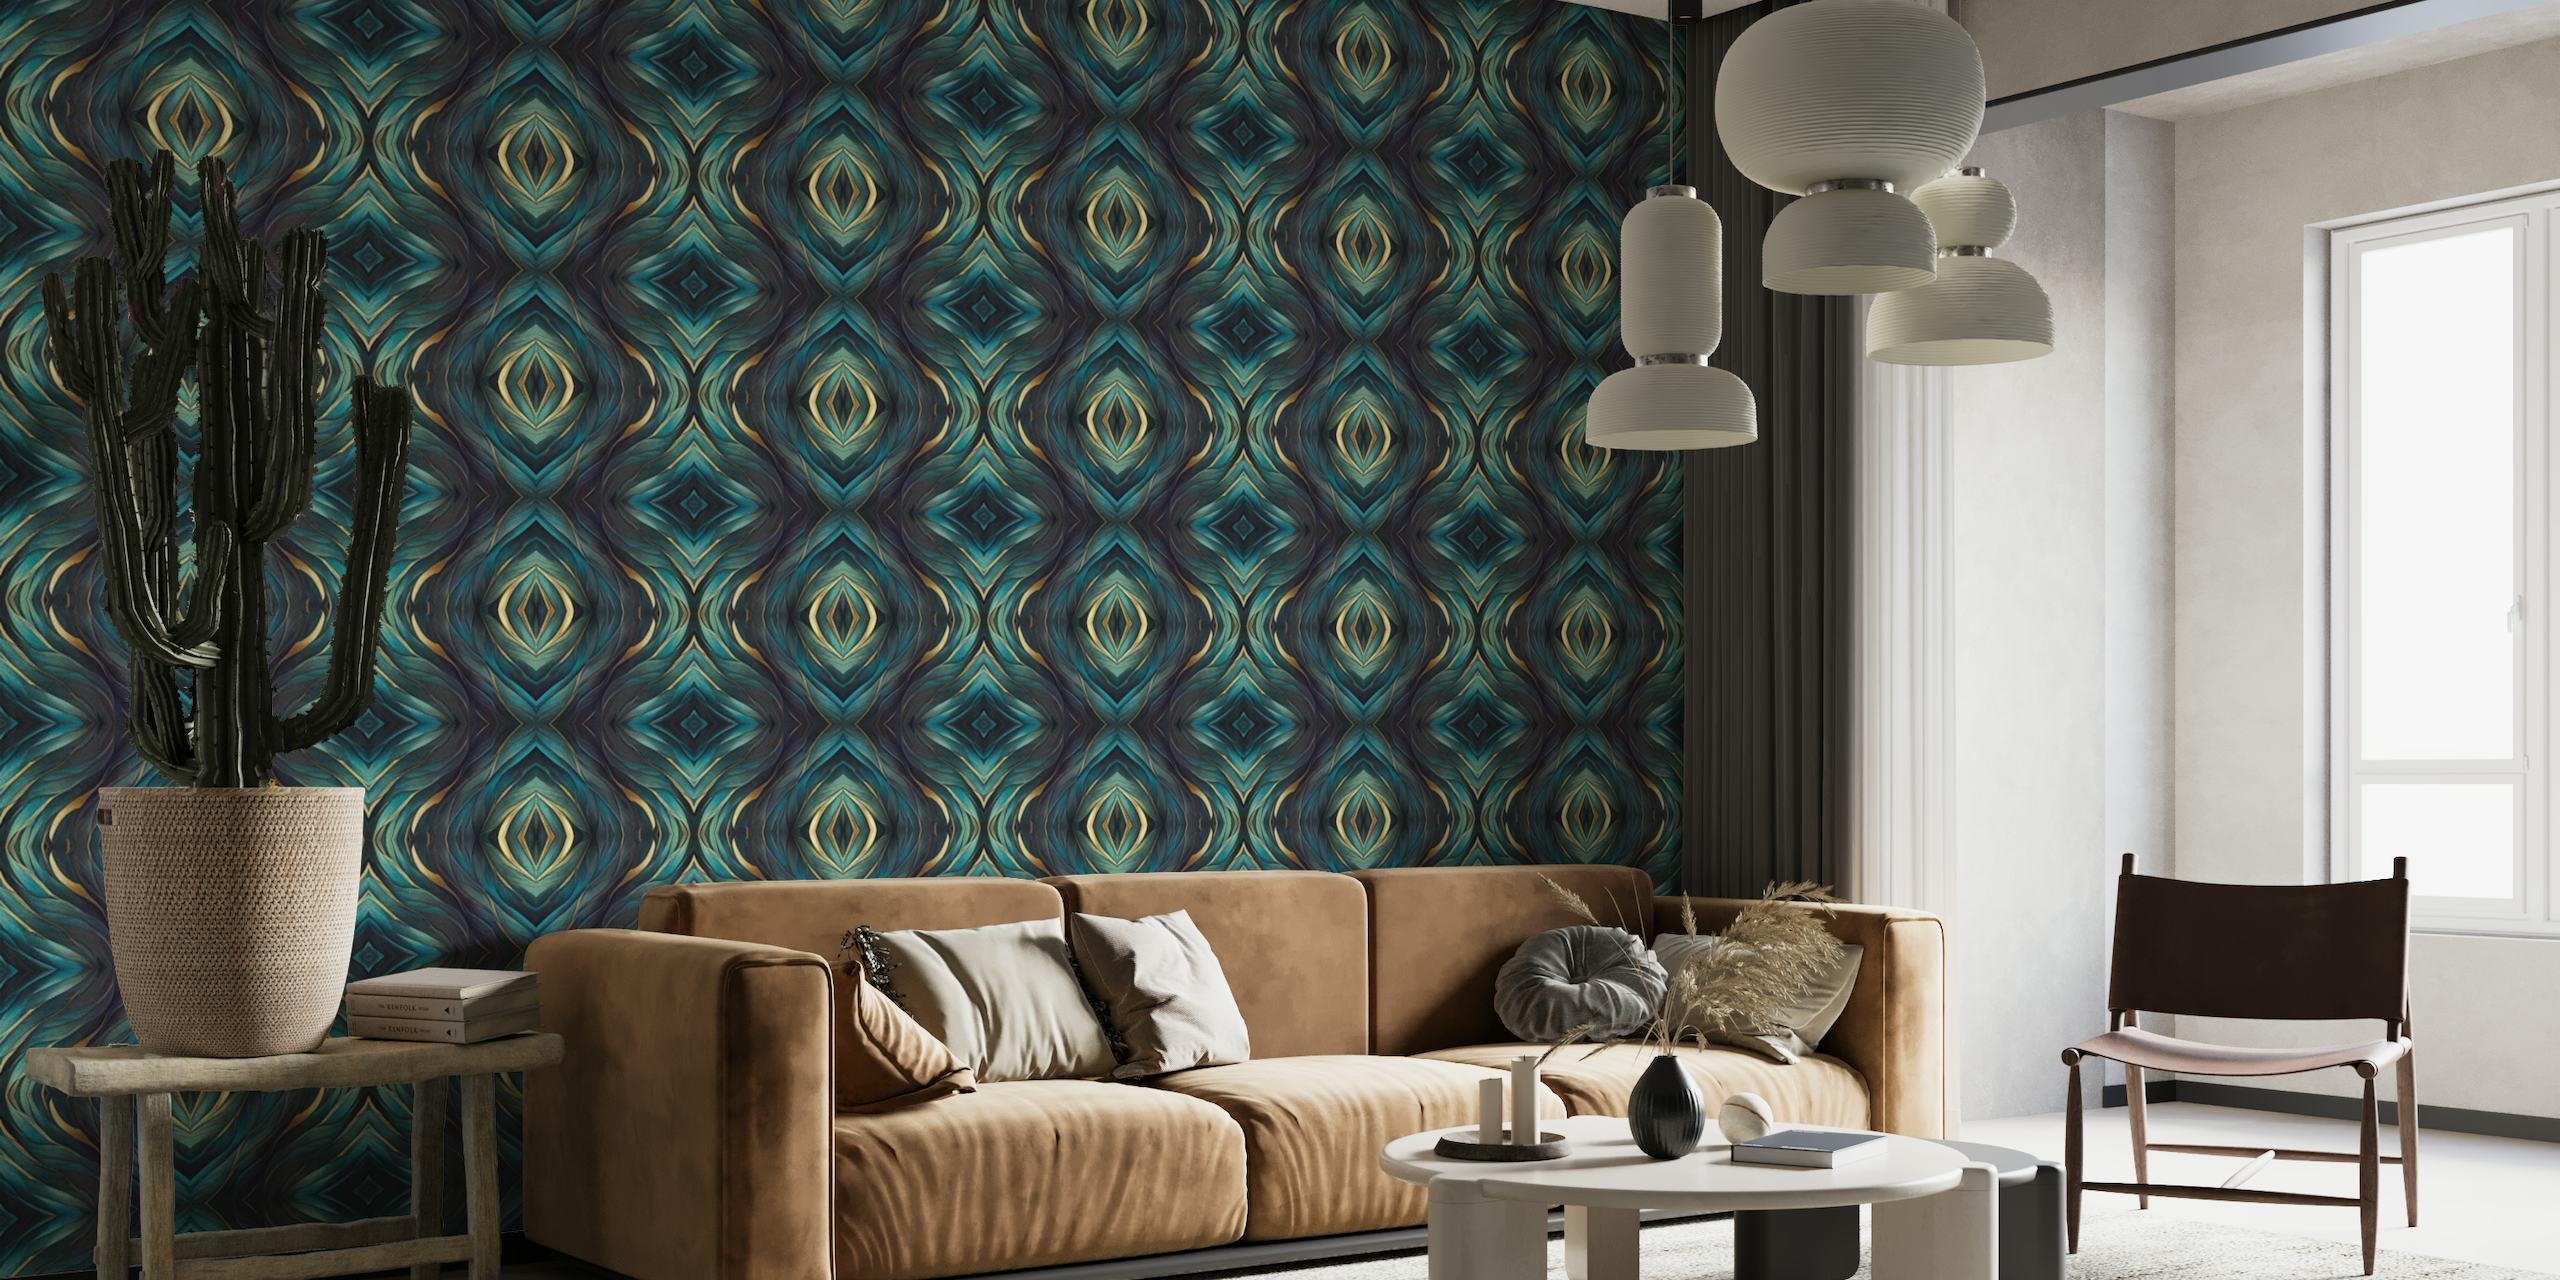 Artisanal Mediterranean Tile Design Teal Blue Gold tapet